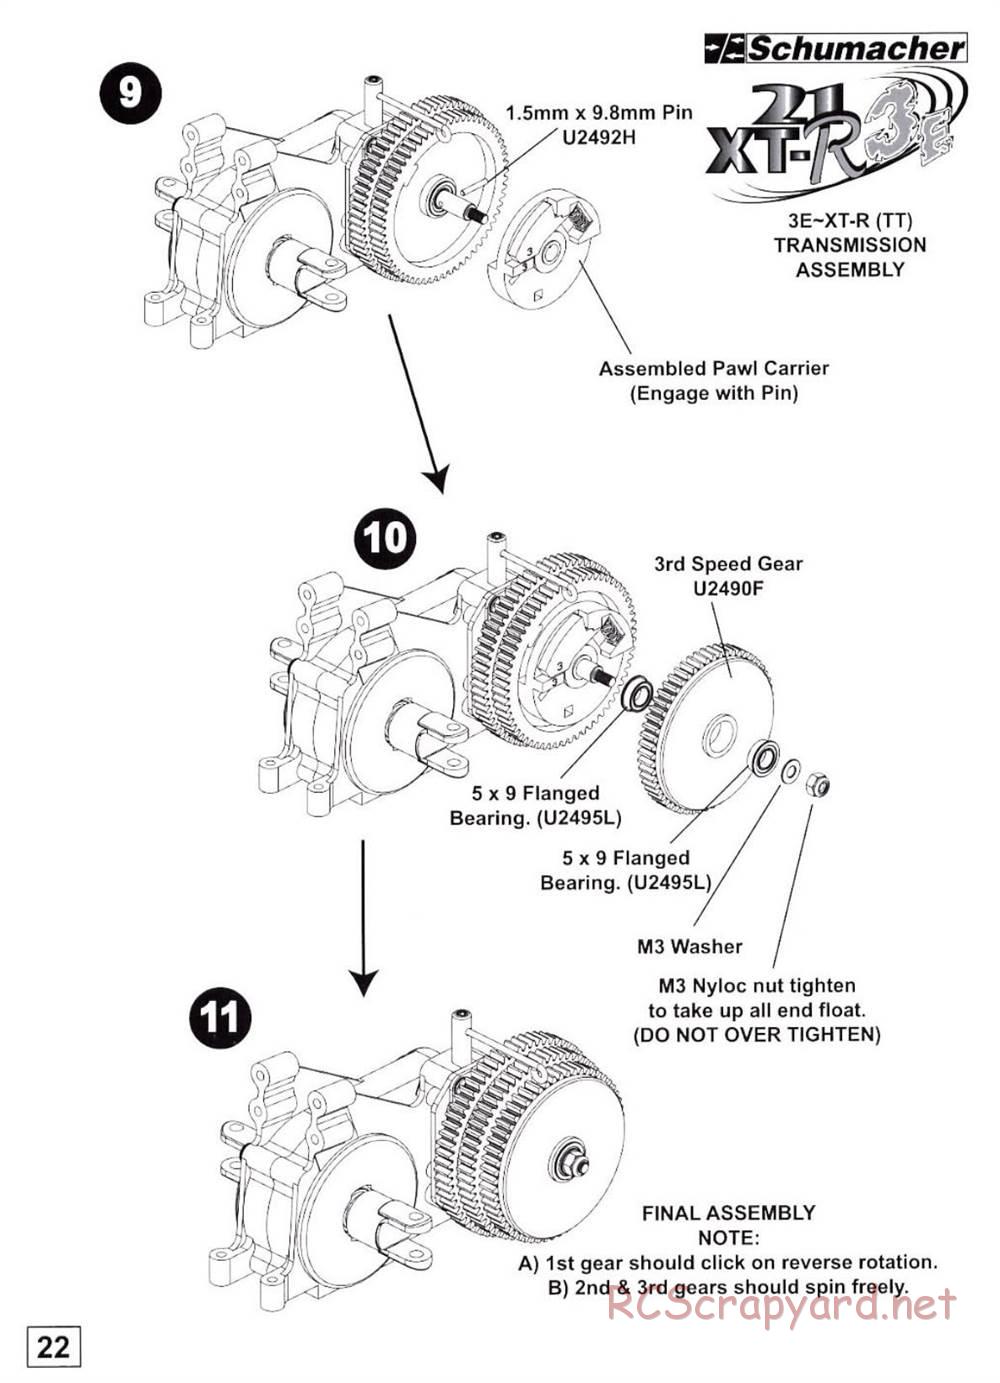 Schumacher - Nitro 21 XT-R3E - Manual - Page 17